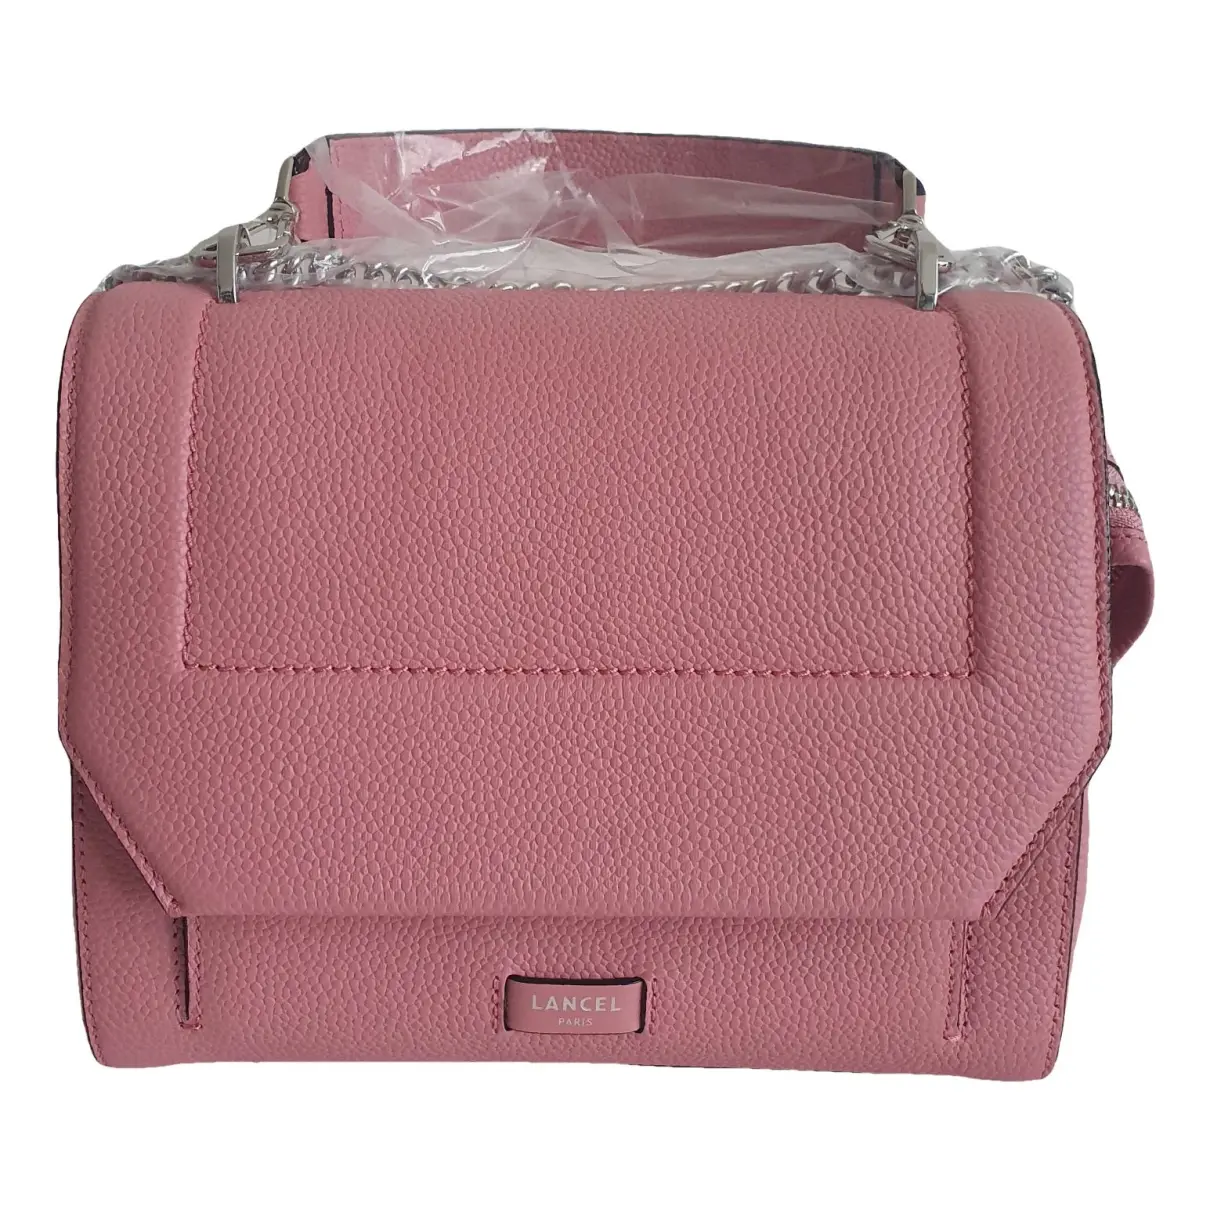 Ninon leather handbag